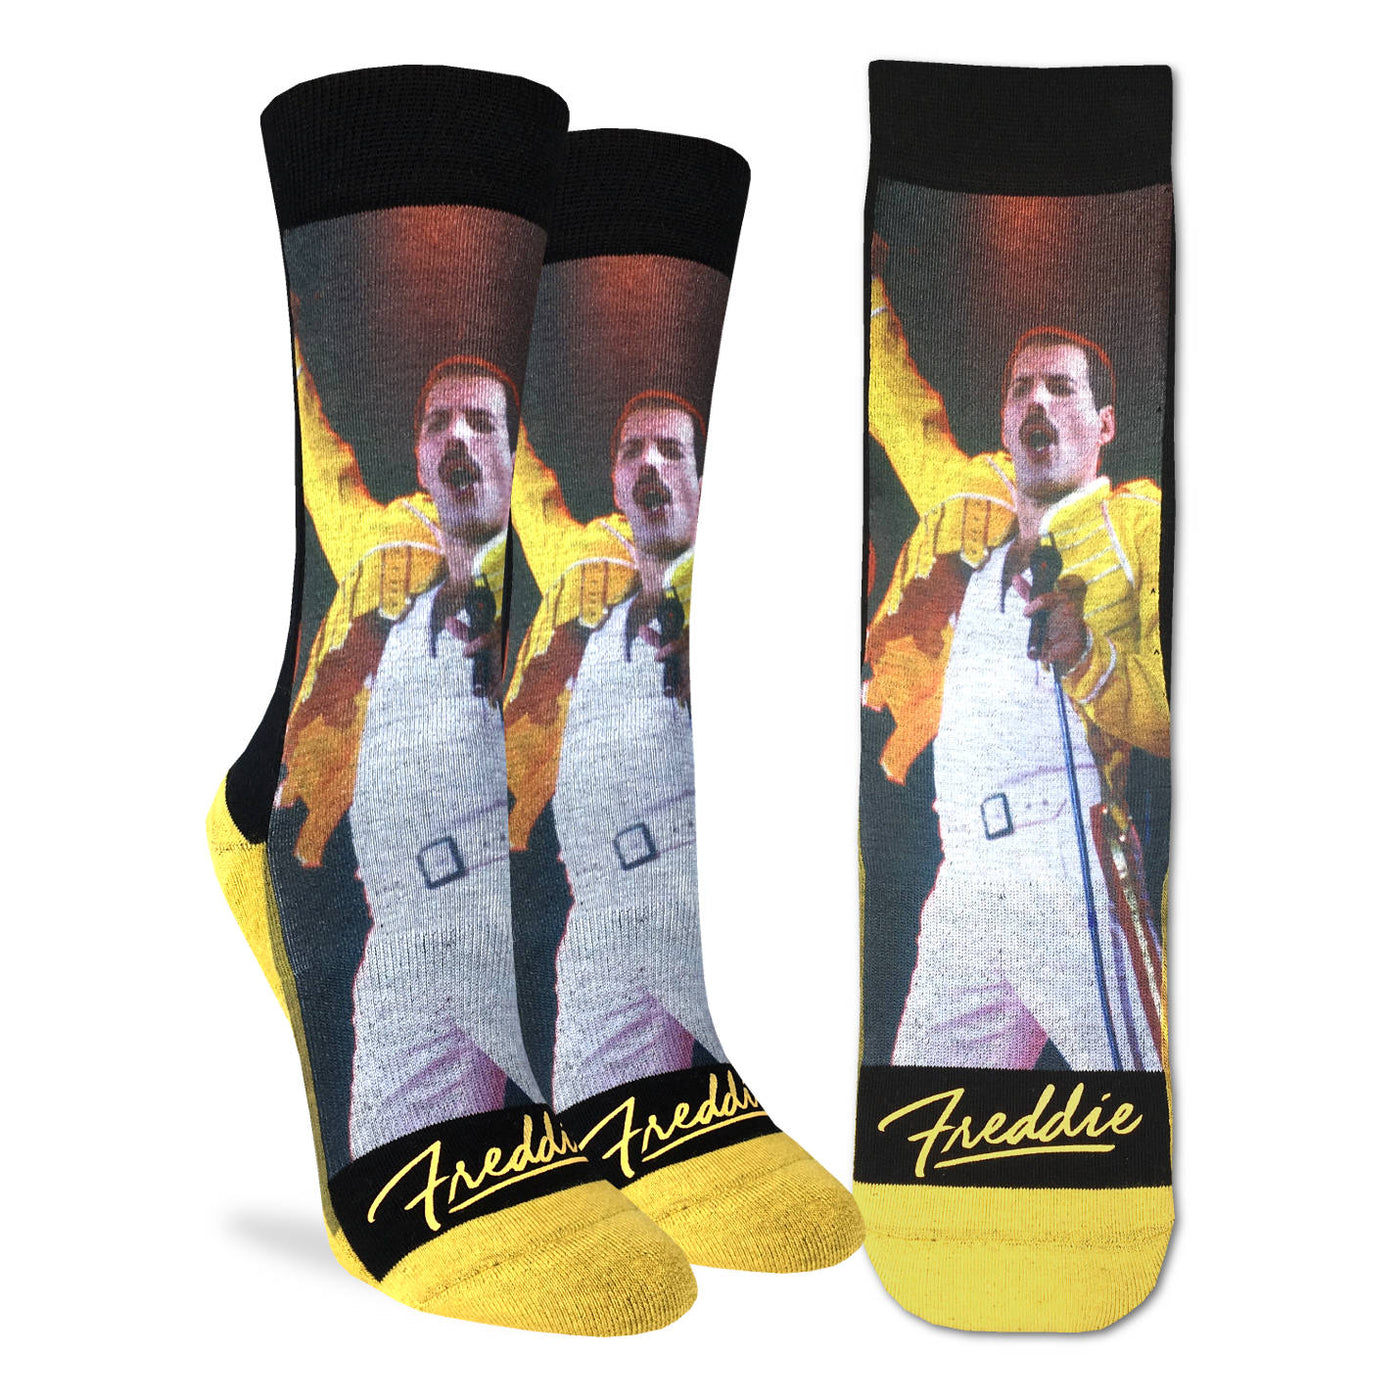 "Freddie at Wembley" Crew Socks by Good Luck